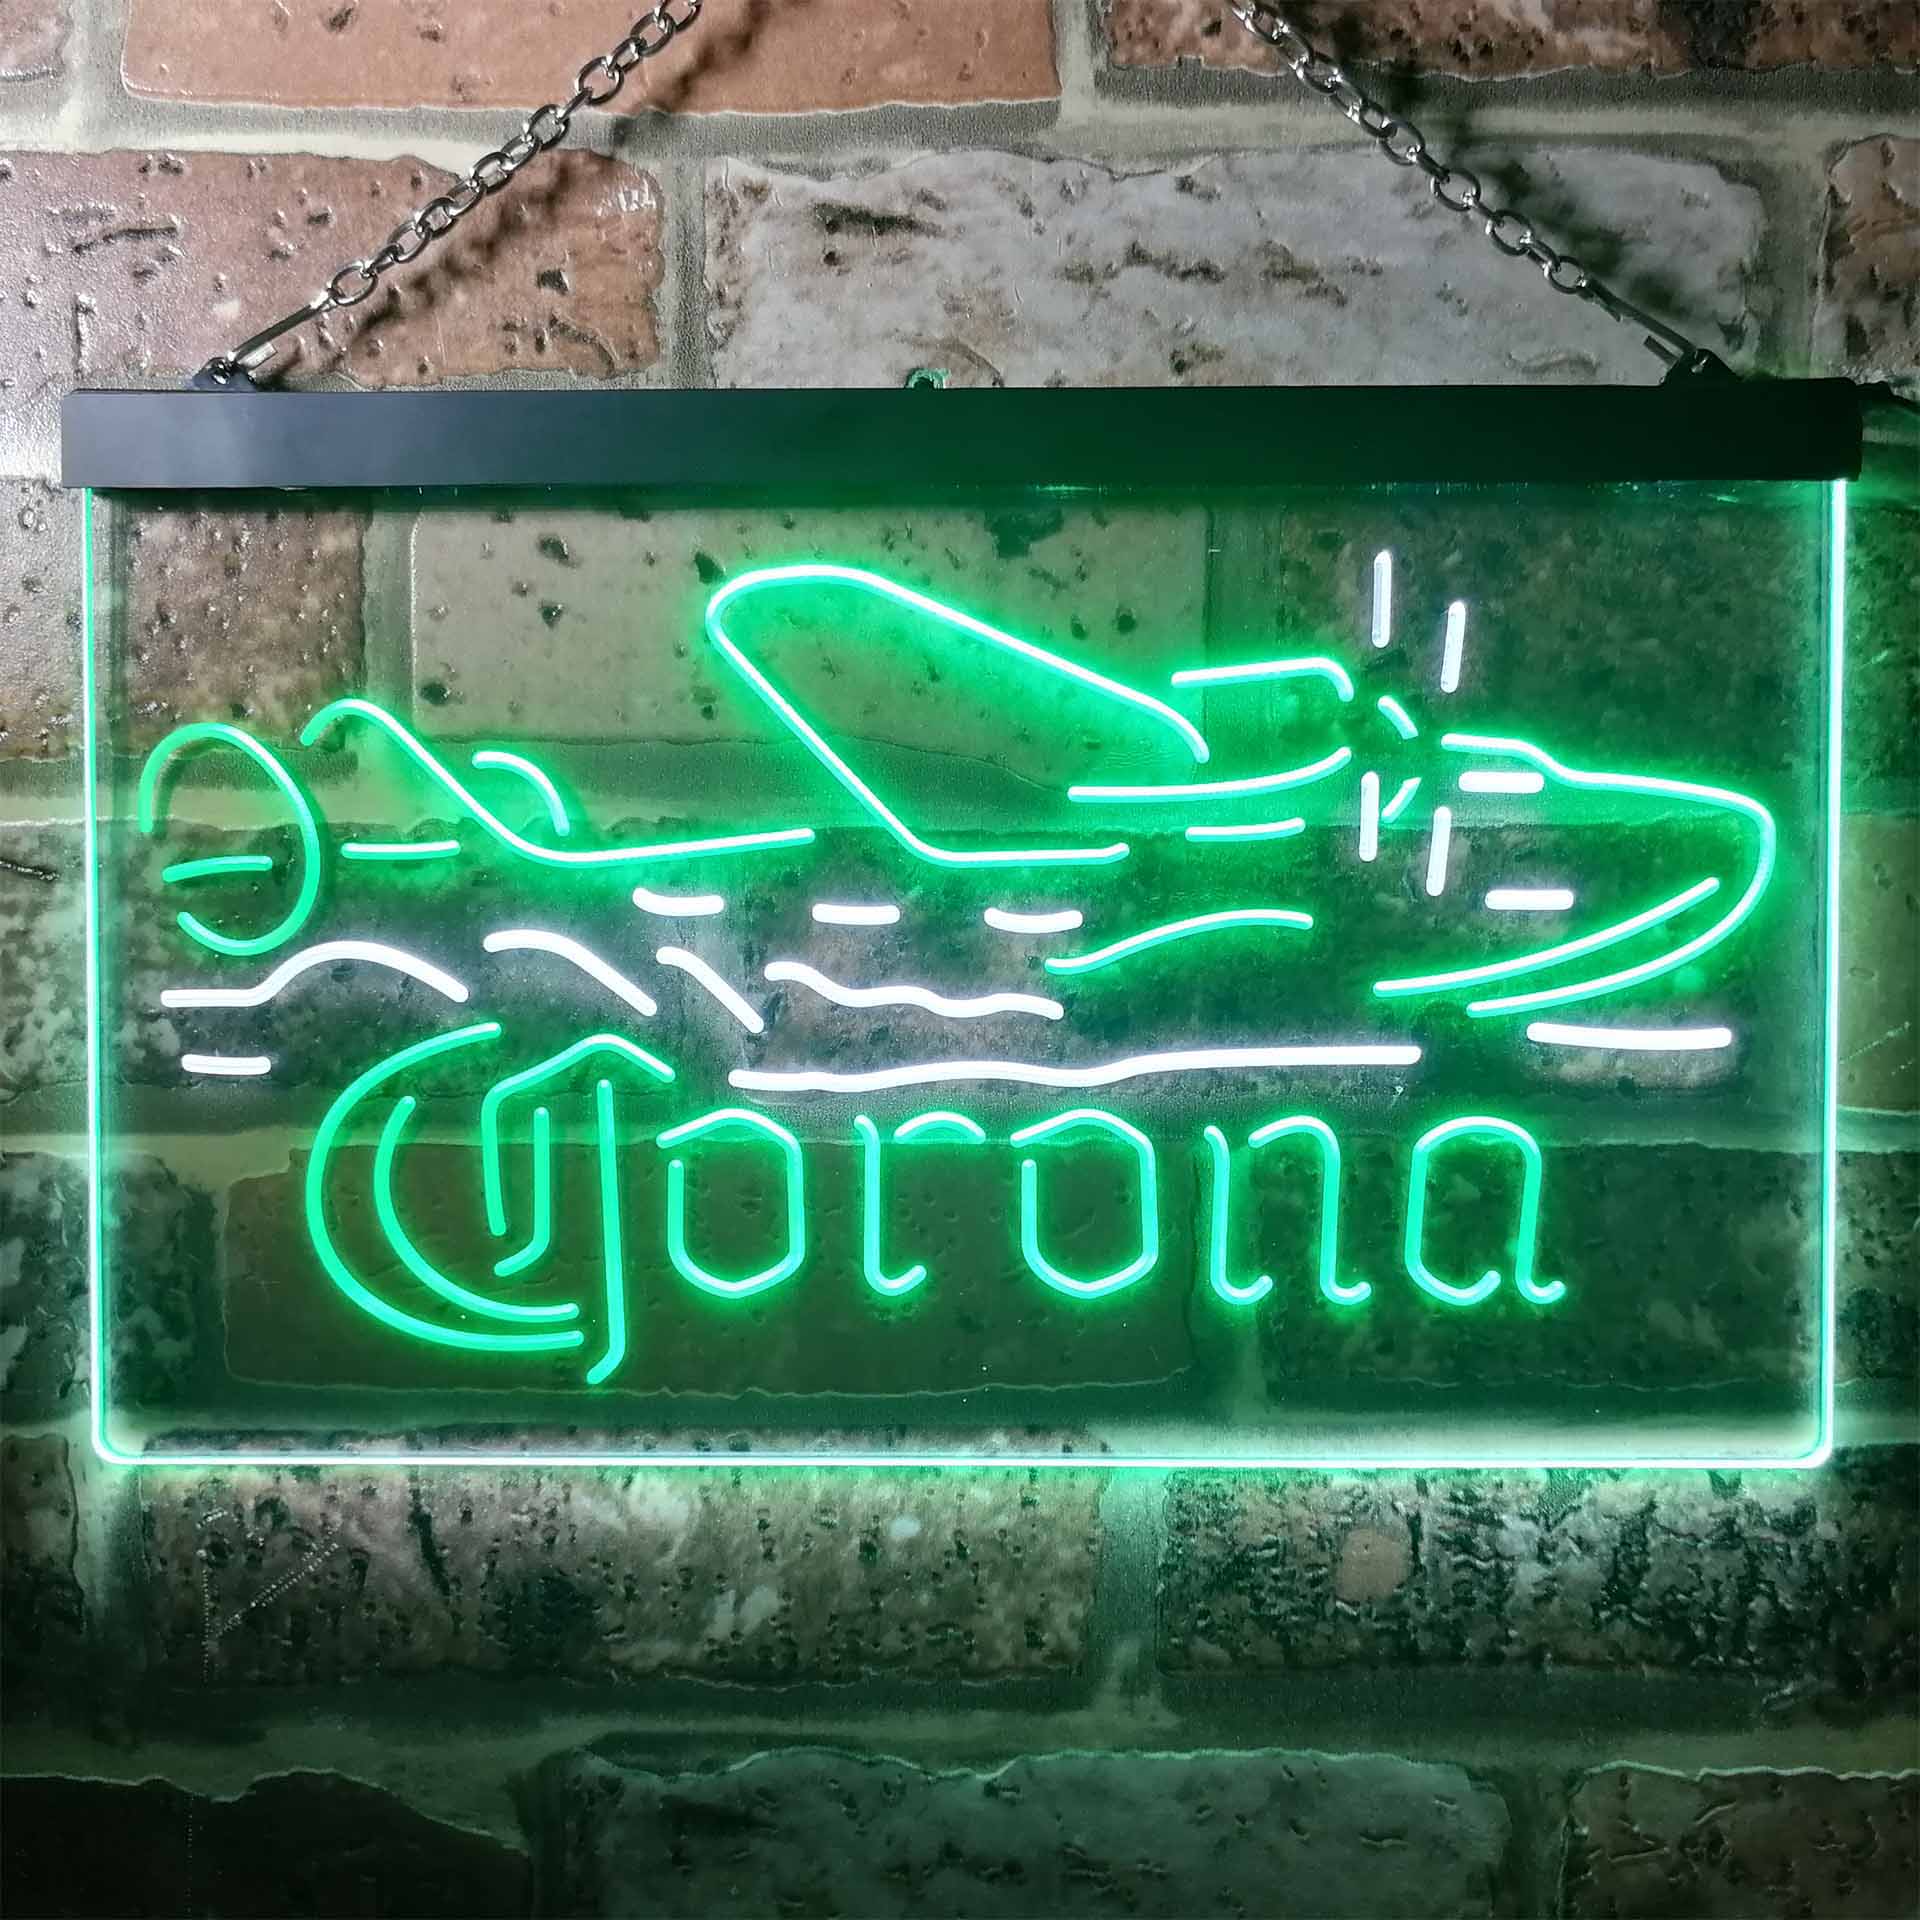 Corona Seaplane Hydroplane Neon-Like LED Sign